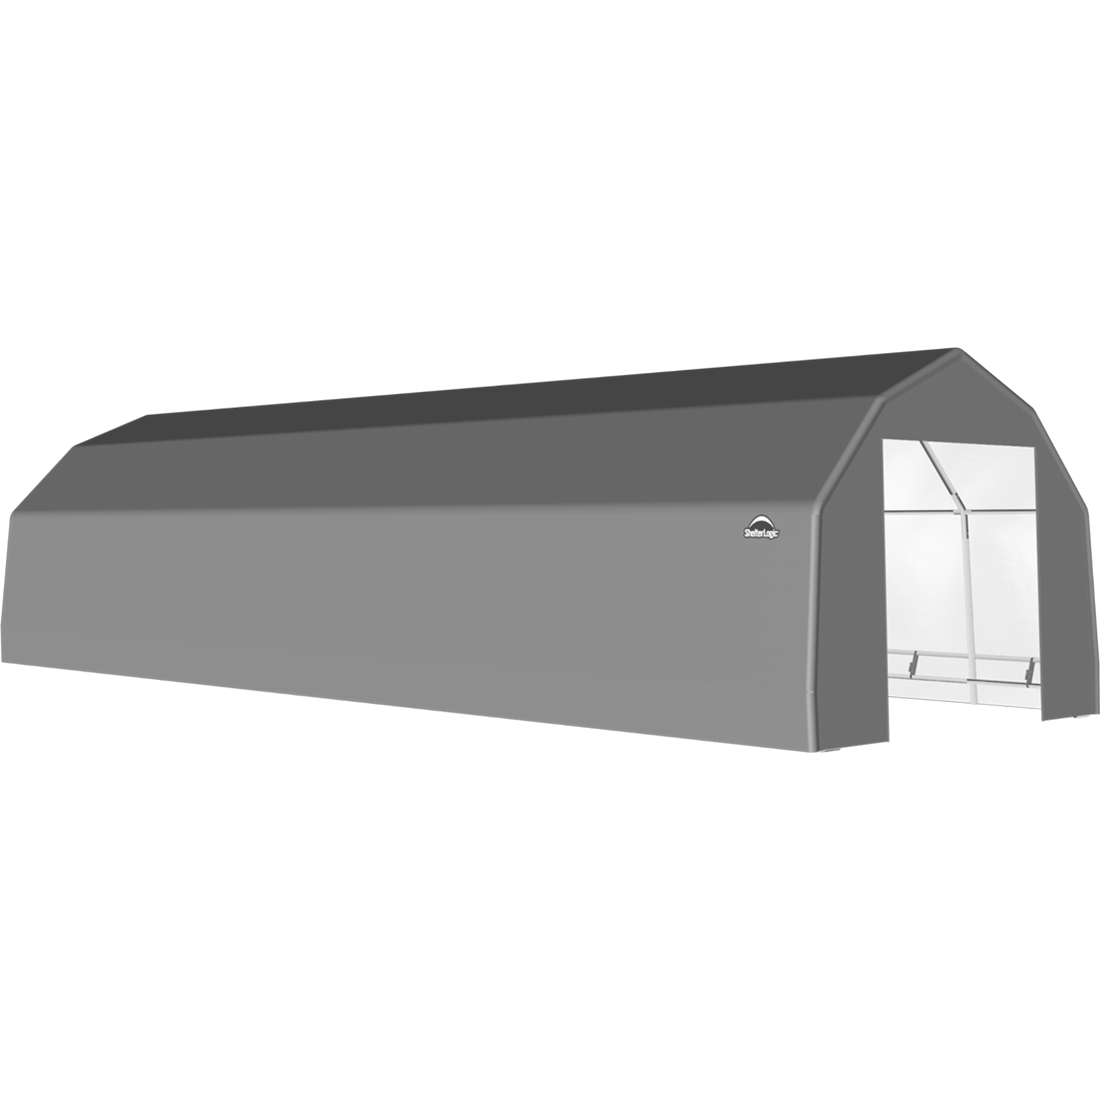 ShelterTech SP Series Barn Shelter, 15 ft. x 44 ft. x 11 ft. Heavy Duty PVC 14.5 oz. Gray